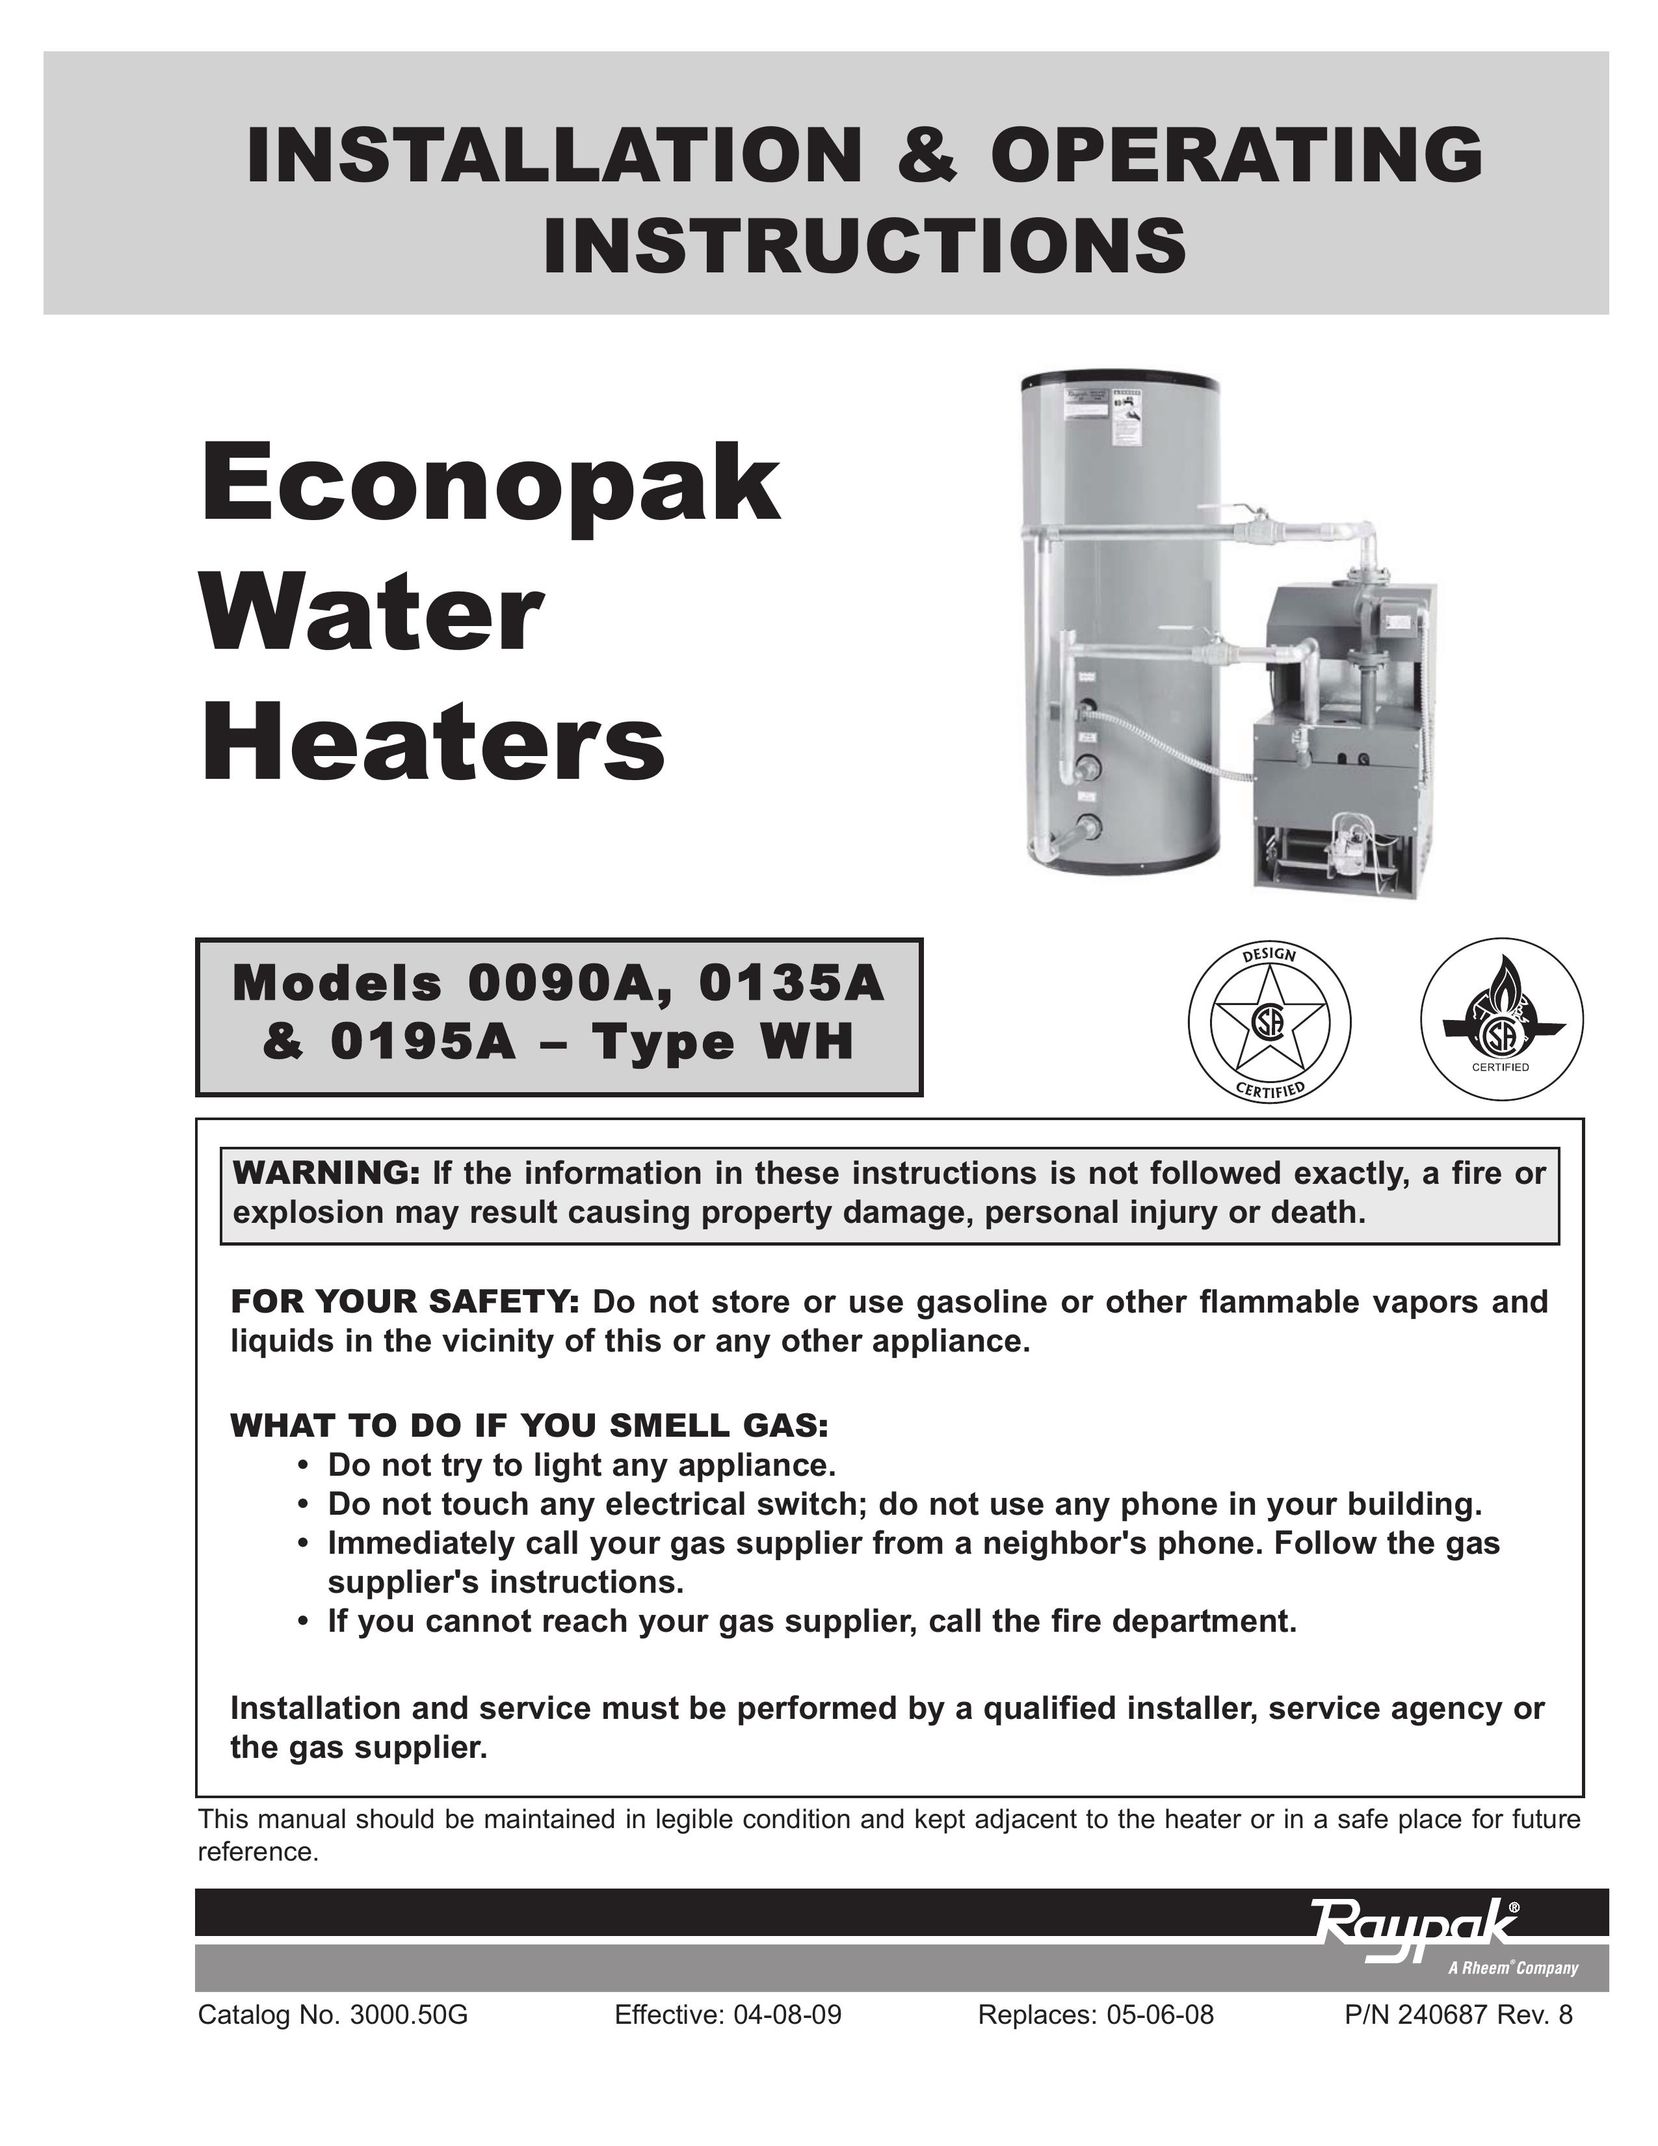 Raypak 0090A Water Heater User Manual